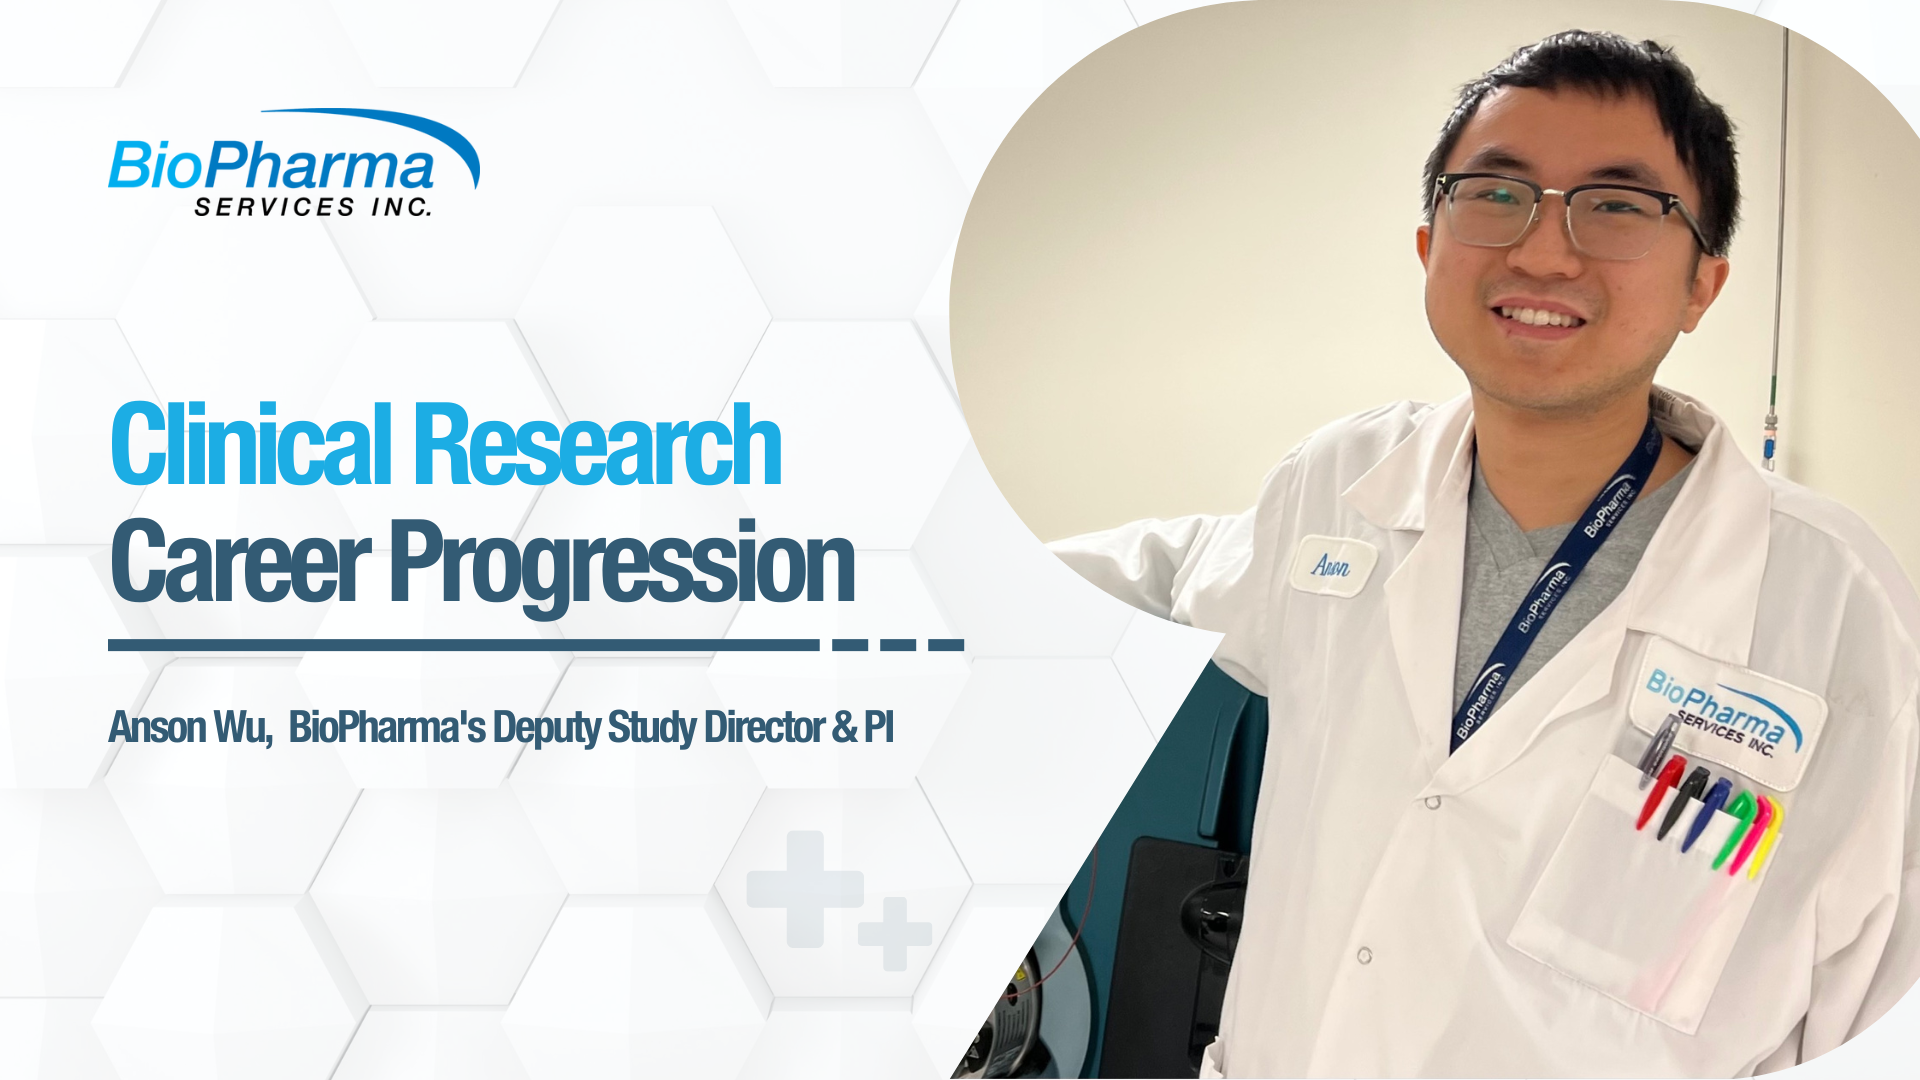 Anson Wu - Blog Career Progression - BioPharma Services image.